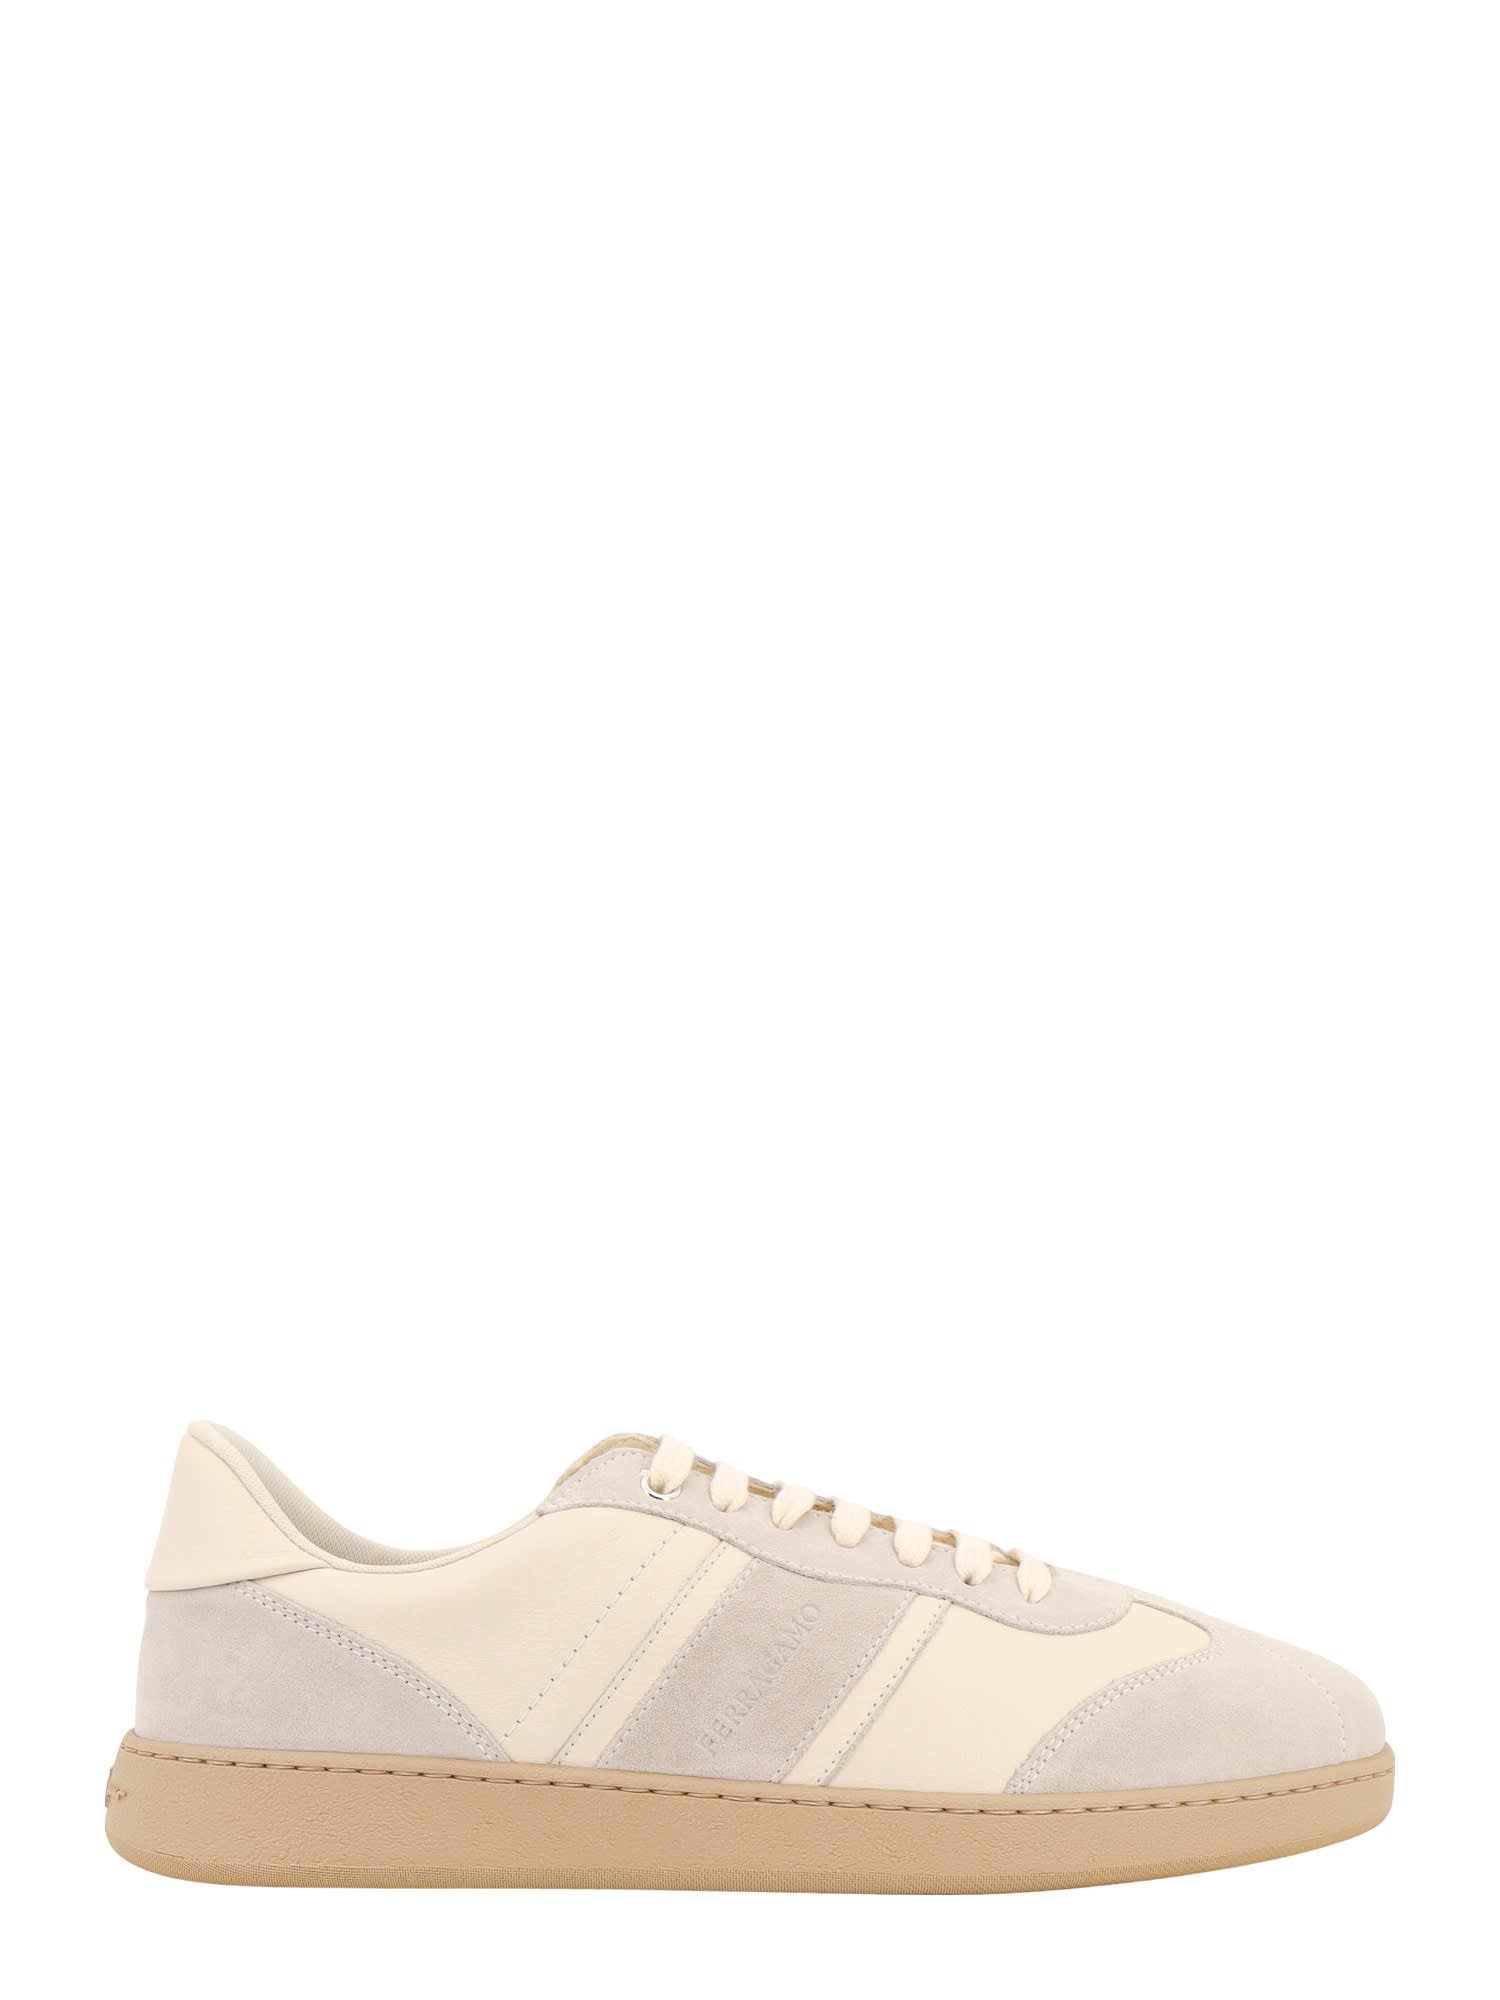 Ferragamo Sneakers In White/grey